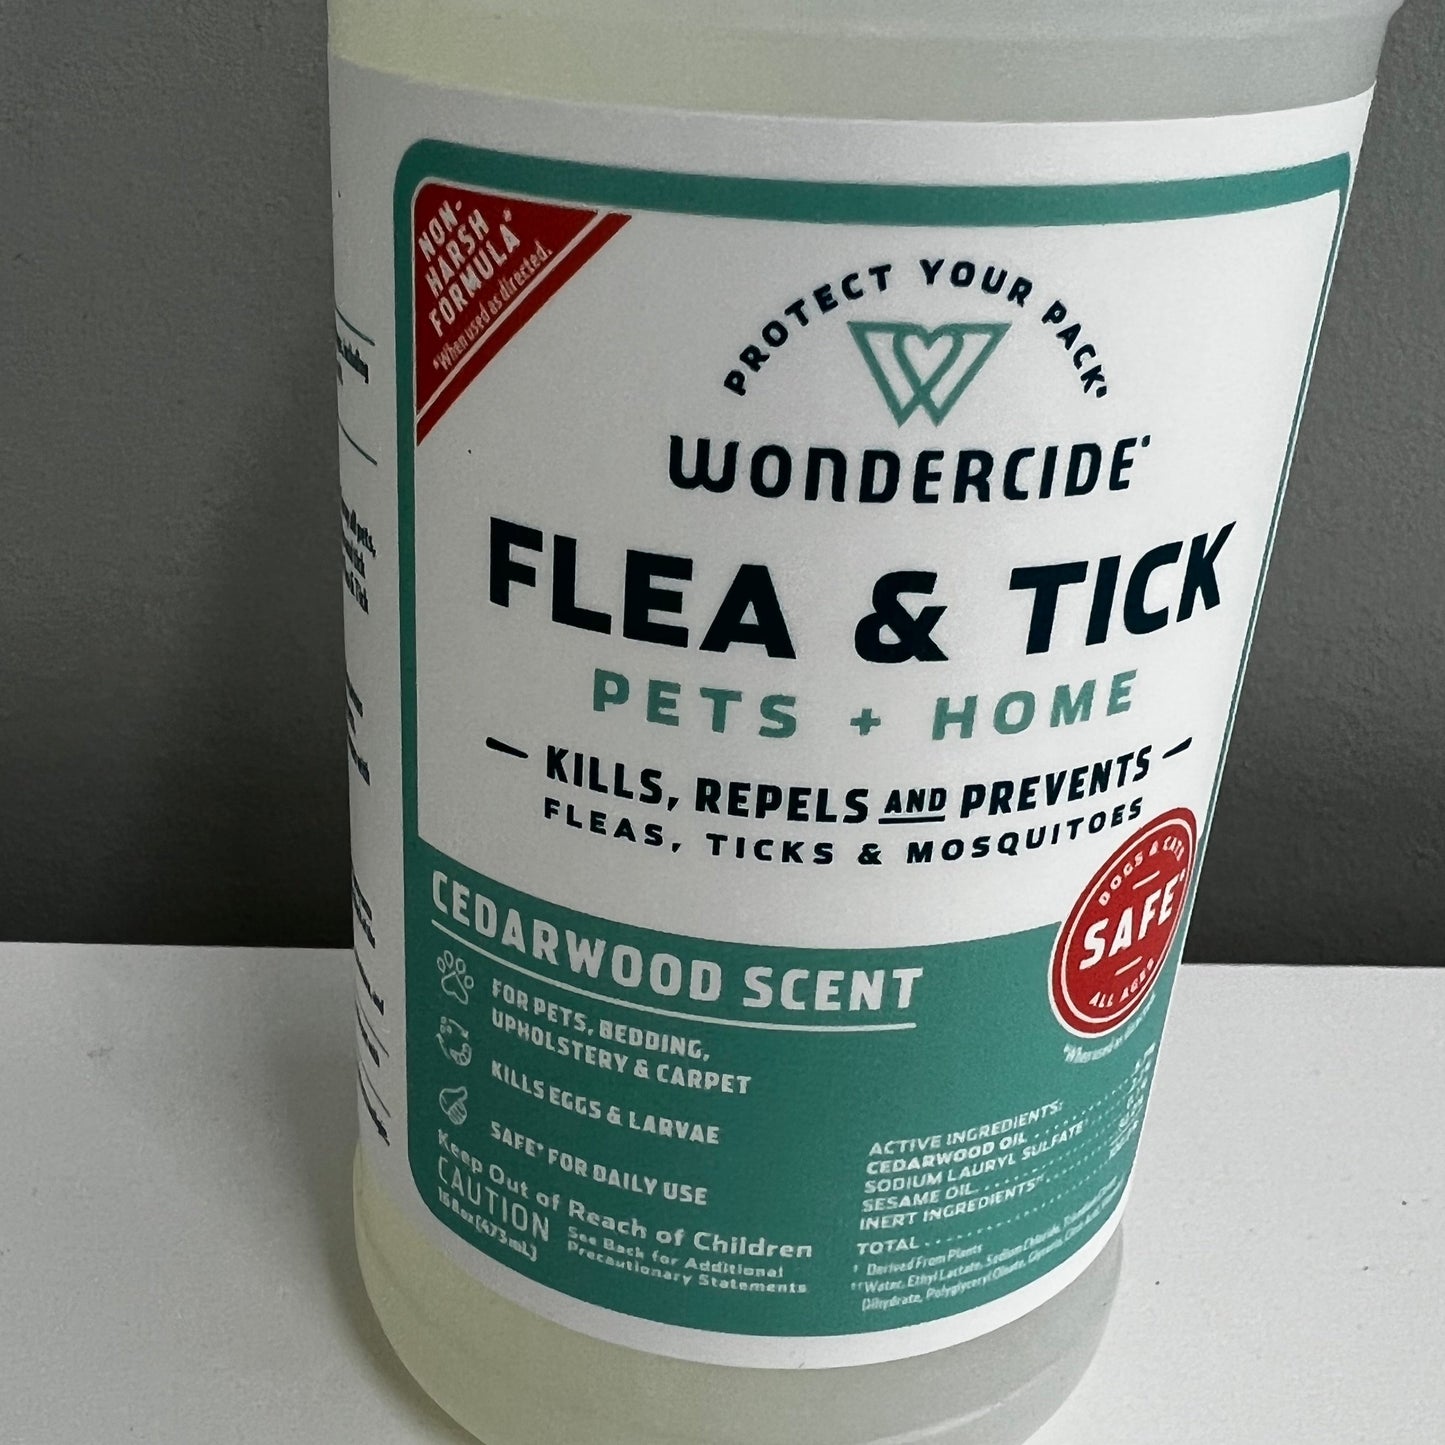 Wondercide Flea & Tick Spray for Pets + Home- Cedarwood